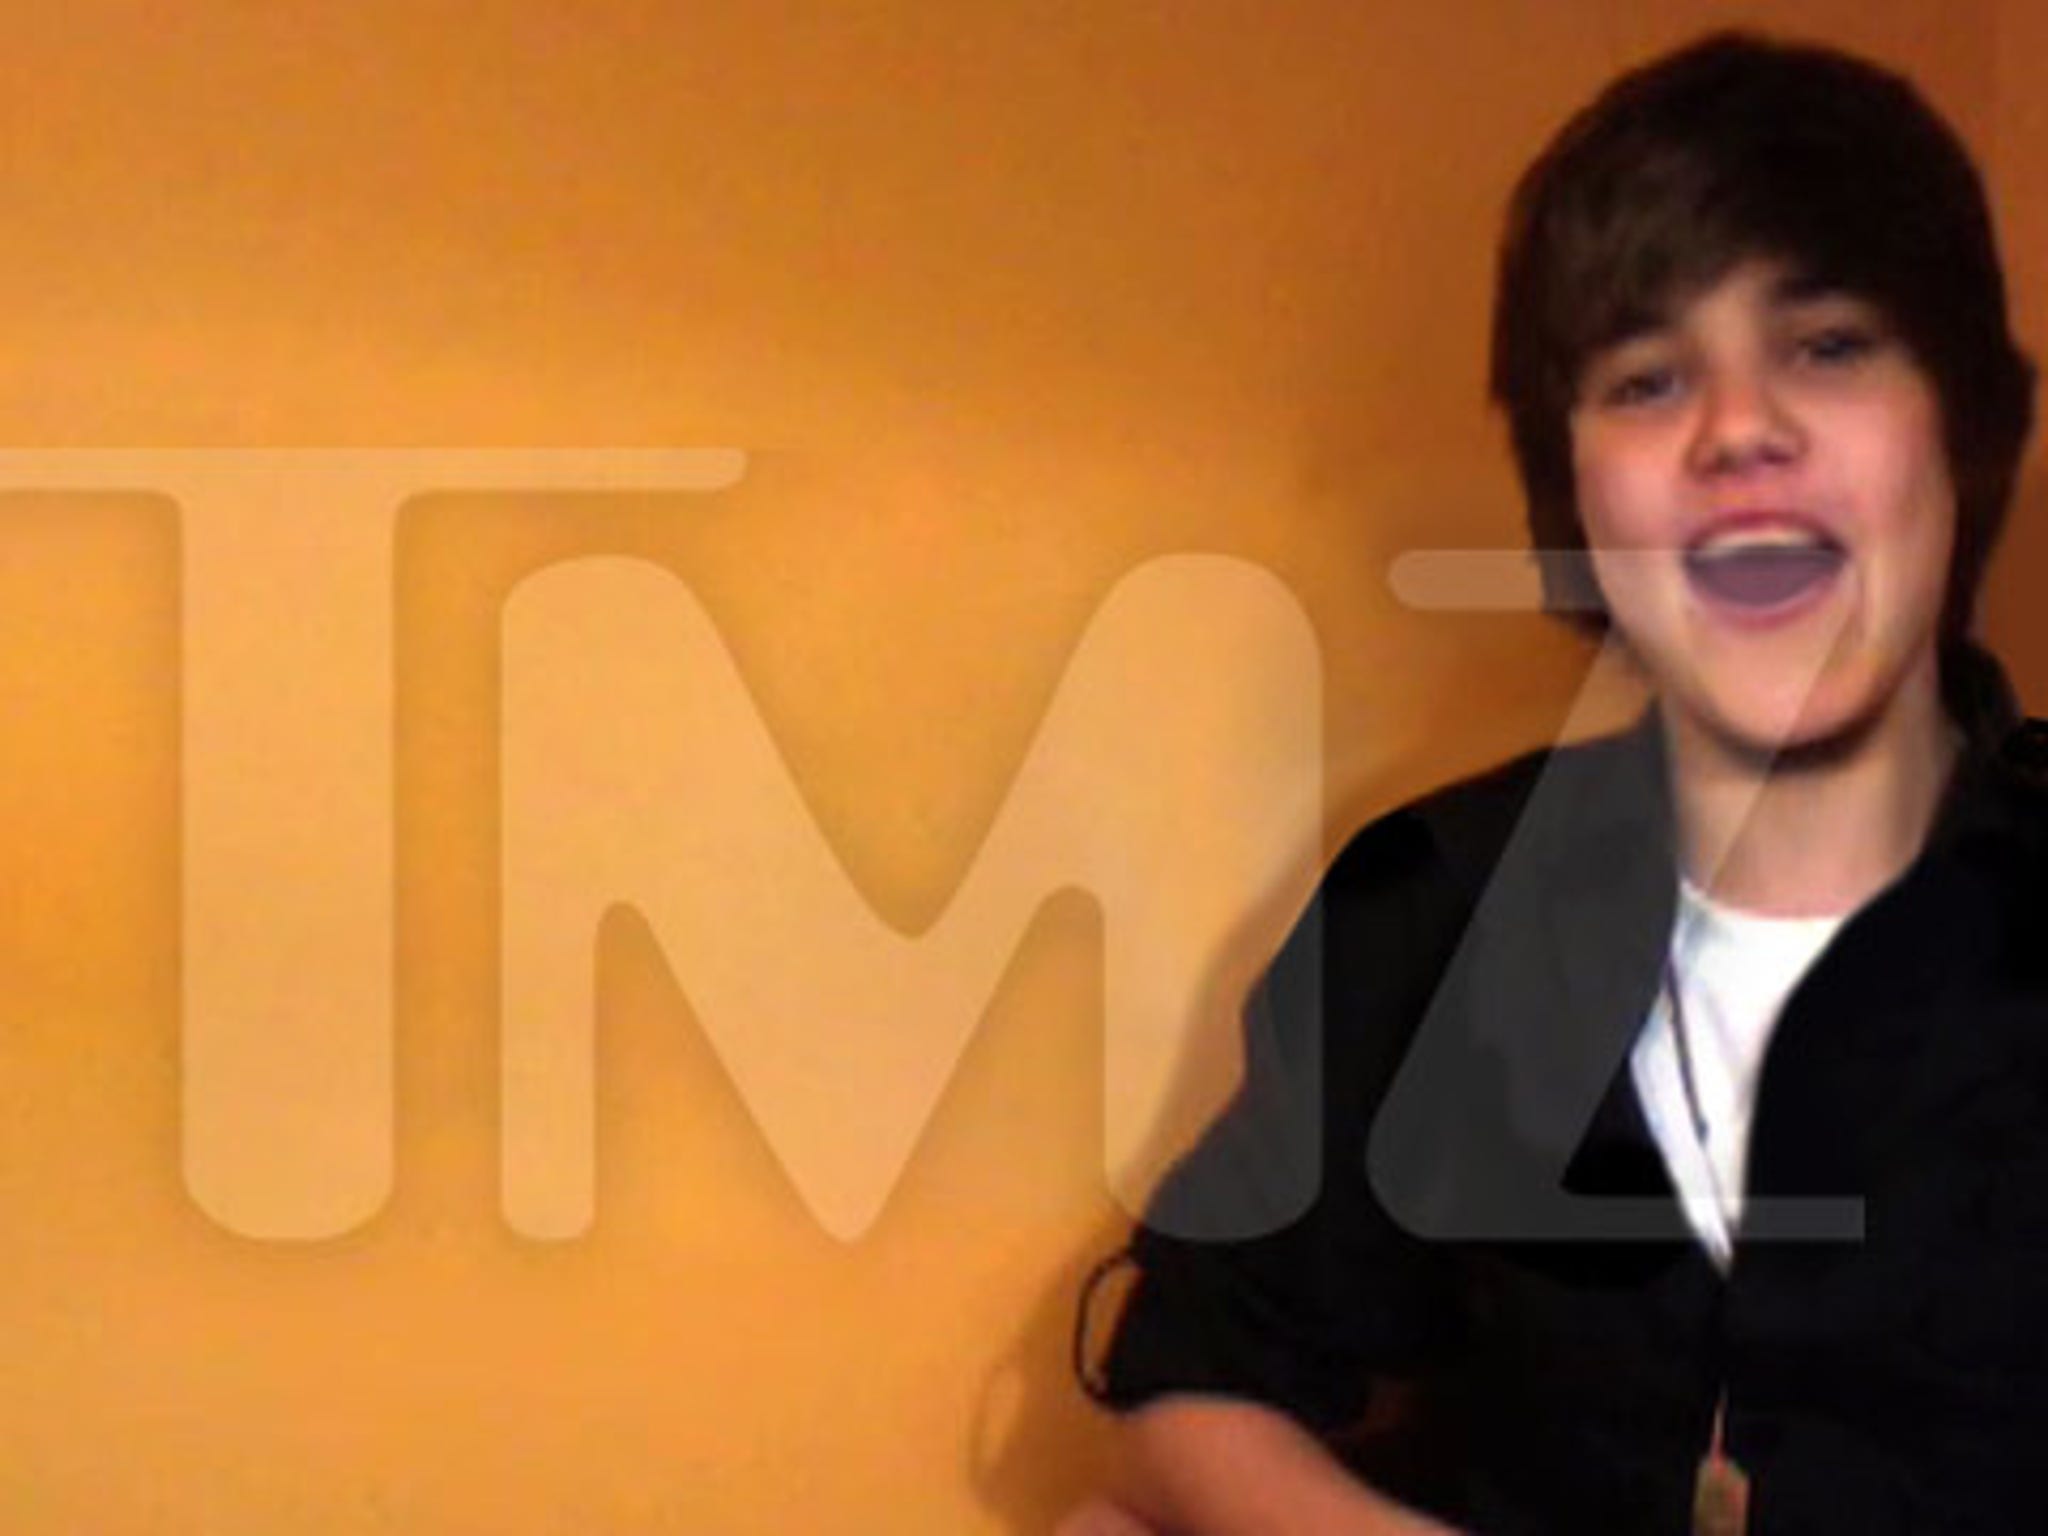 Justin Bieber - One Time (Lyric Video) HD 